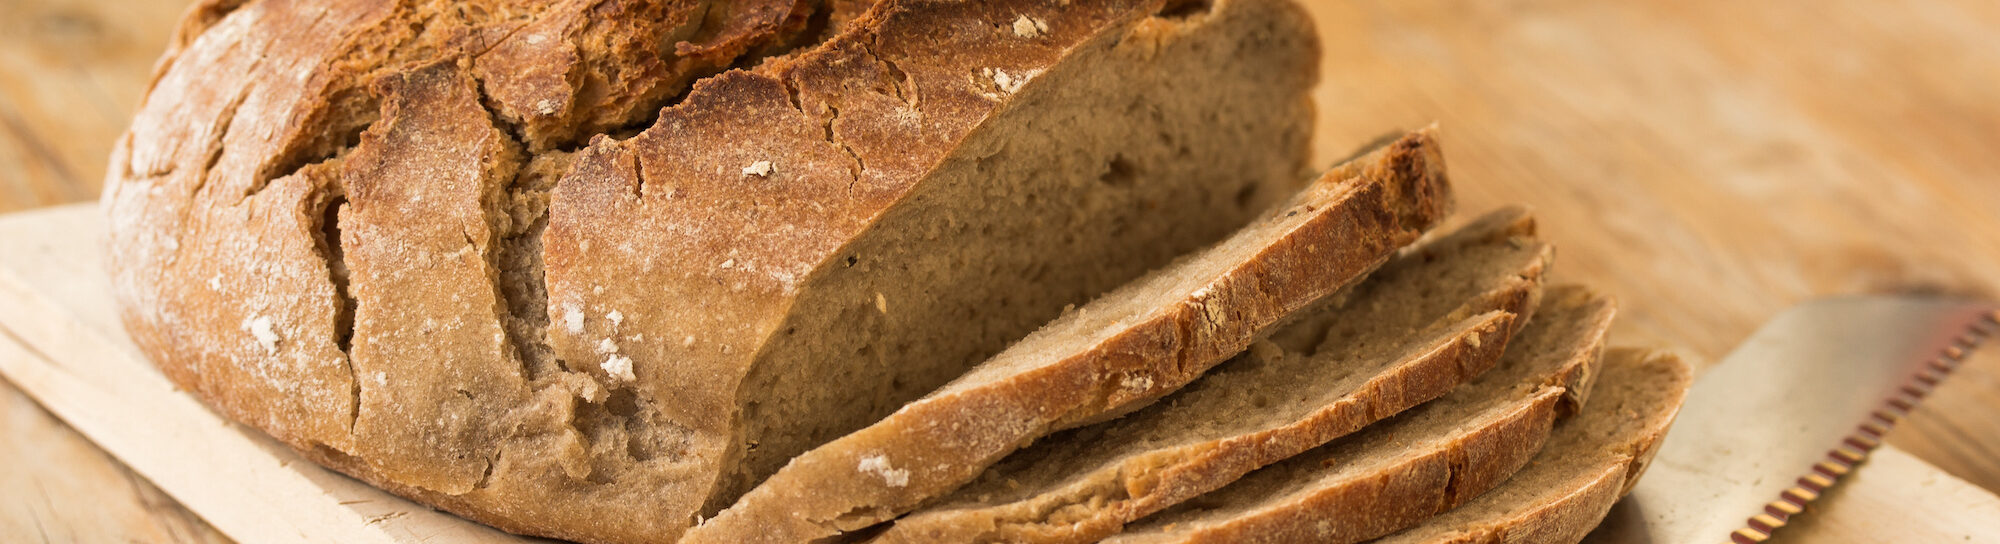 Schweiz muss mehr Brotgetreide importieren